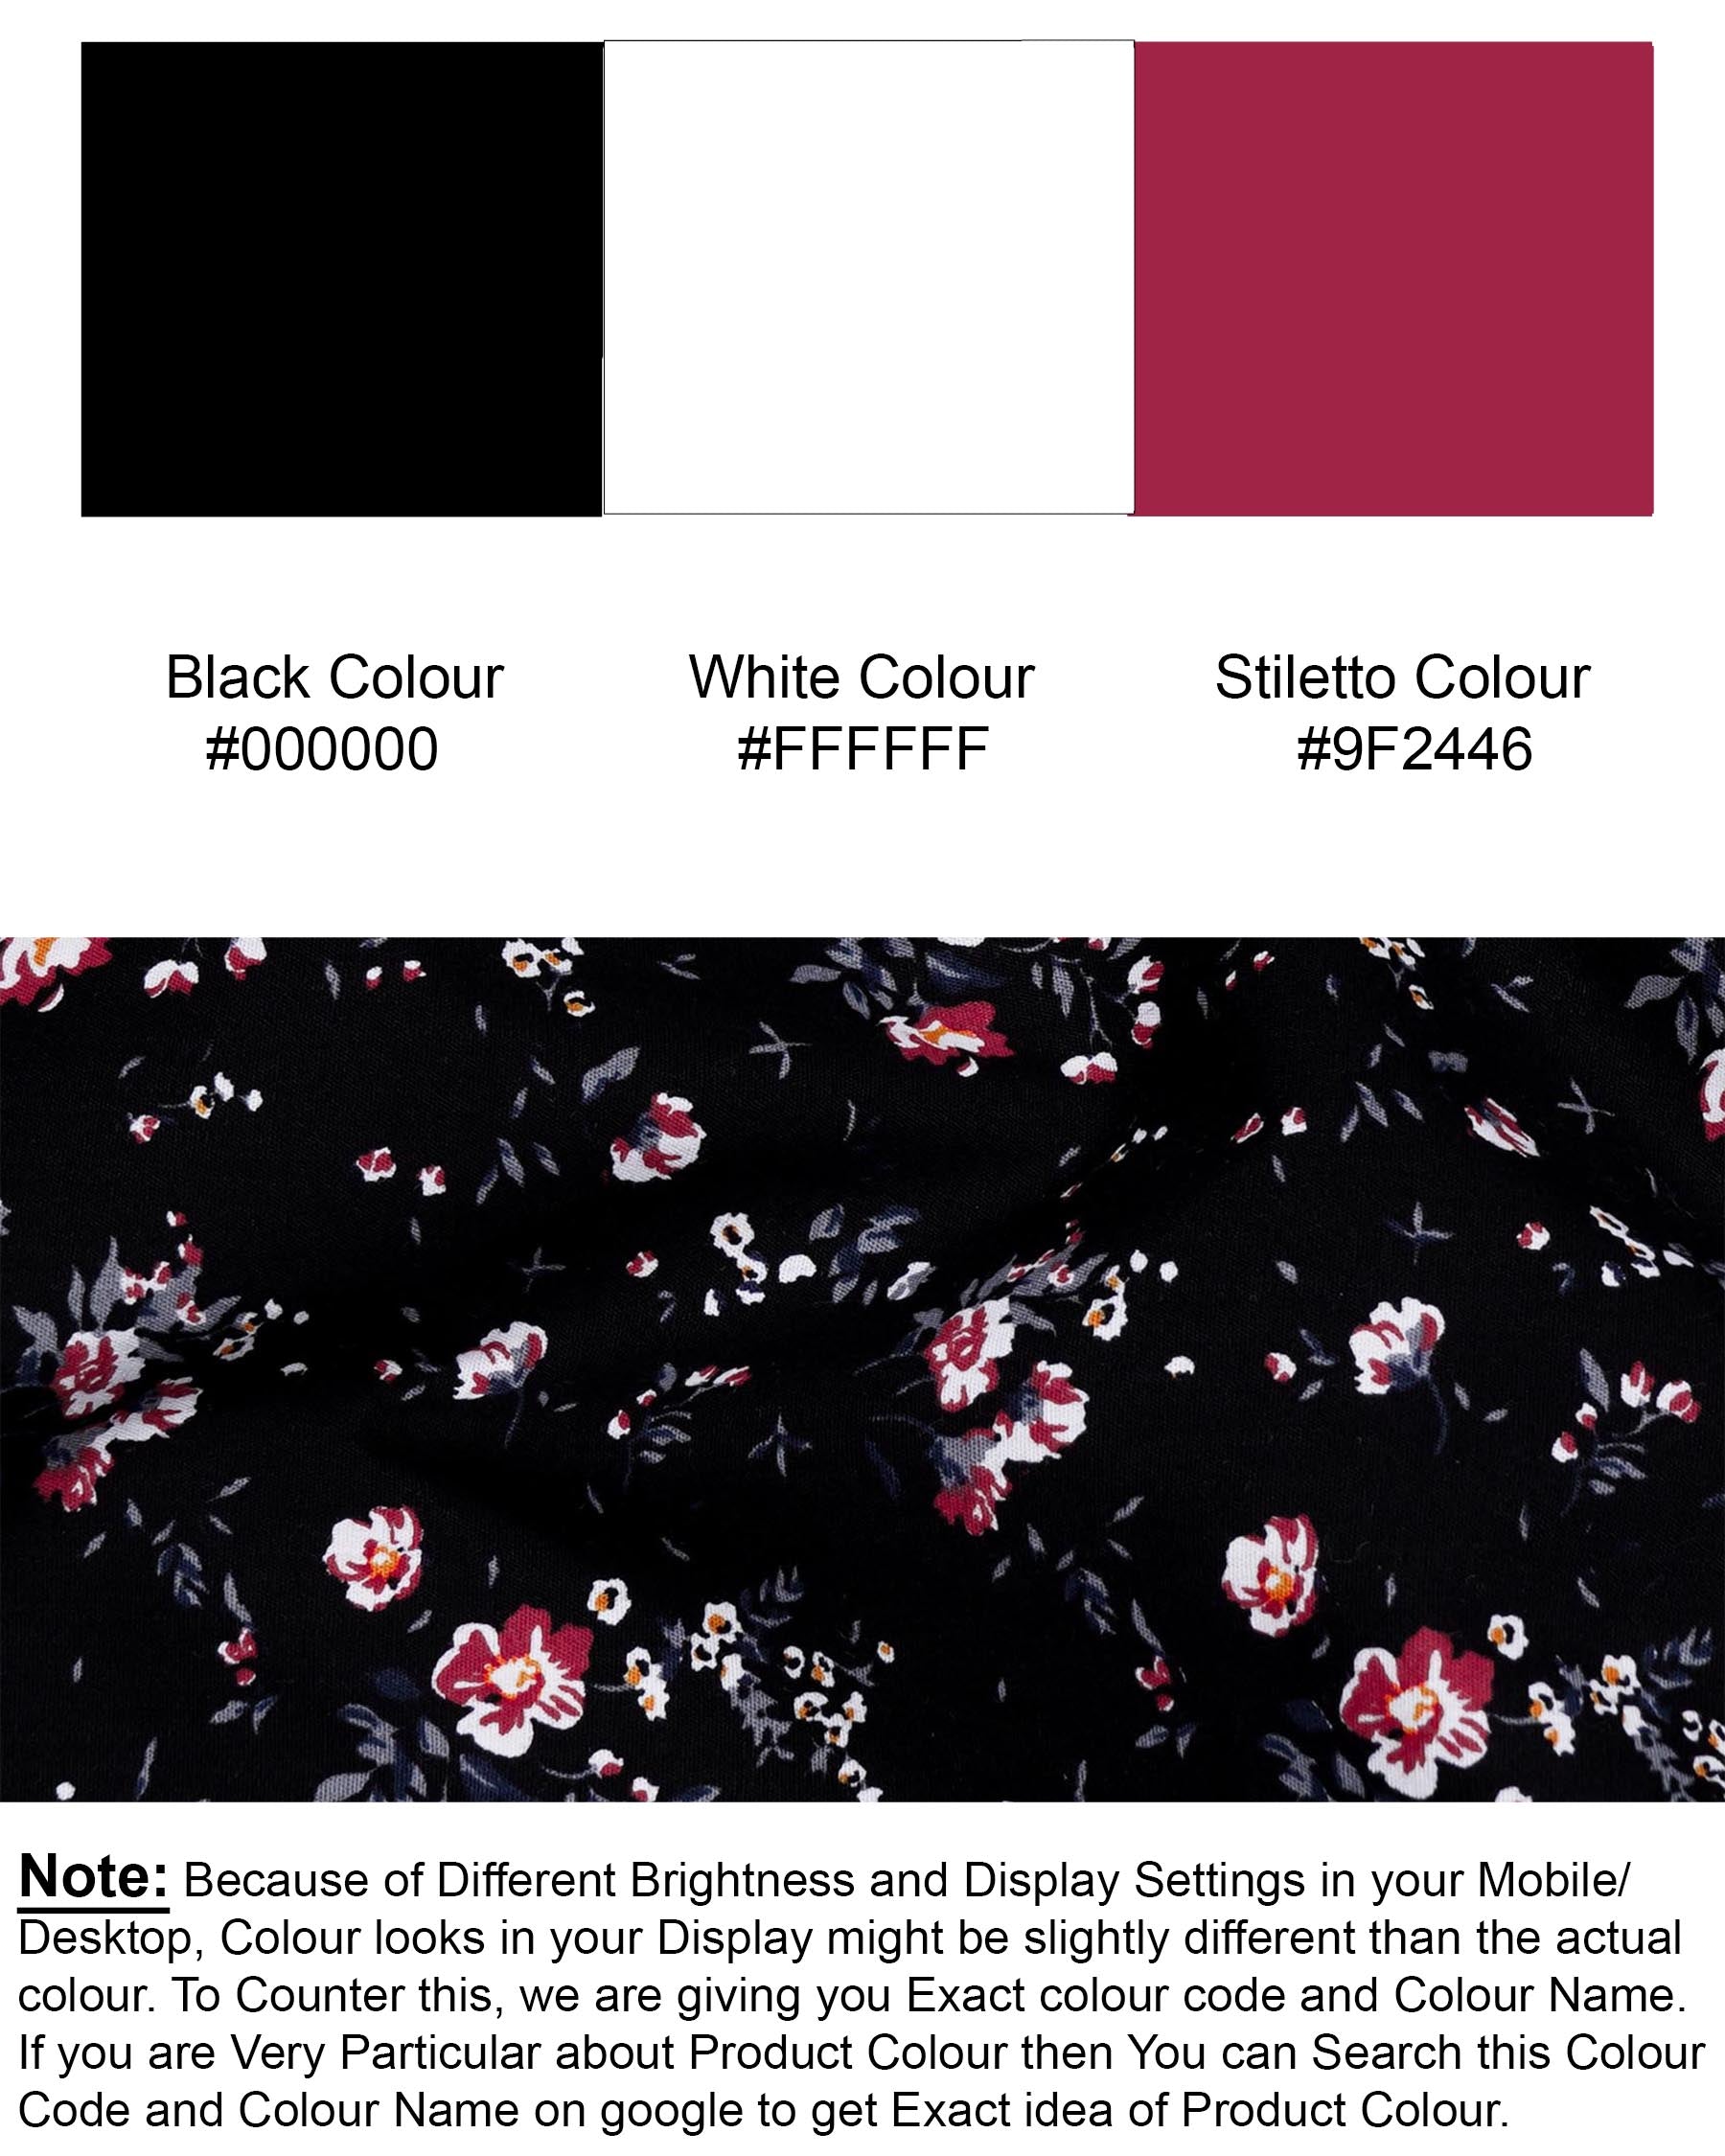 Jade Black Ditzy Floral Printed Twill Premium Cotton Shirt 7571-BLK-38,7571-BLK-38,7571-BLK-39,7571-BLK-39,7571-BLK-40,7571-BLK-40,7571-BLK-42,7571-BLK-42,7571-BLK-44,7571-BLK-44,7571-BLK-46,7571-BLK-46,7571-BLK-48,7571-BLK-48,7571-BLK-50,7571-BLK-50,7571-BLK-52,7571-BLK-52